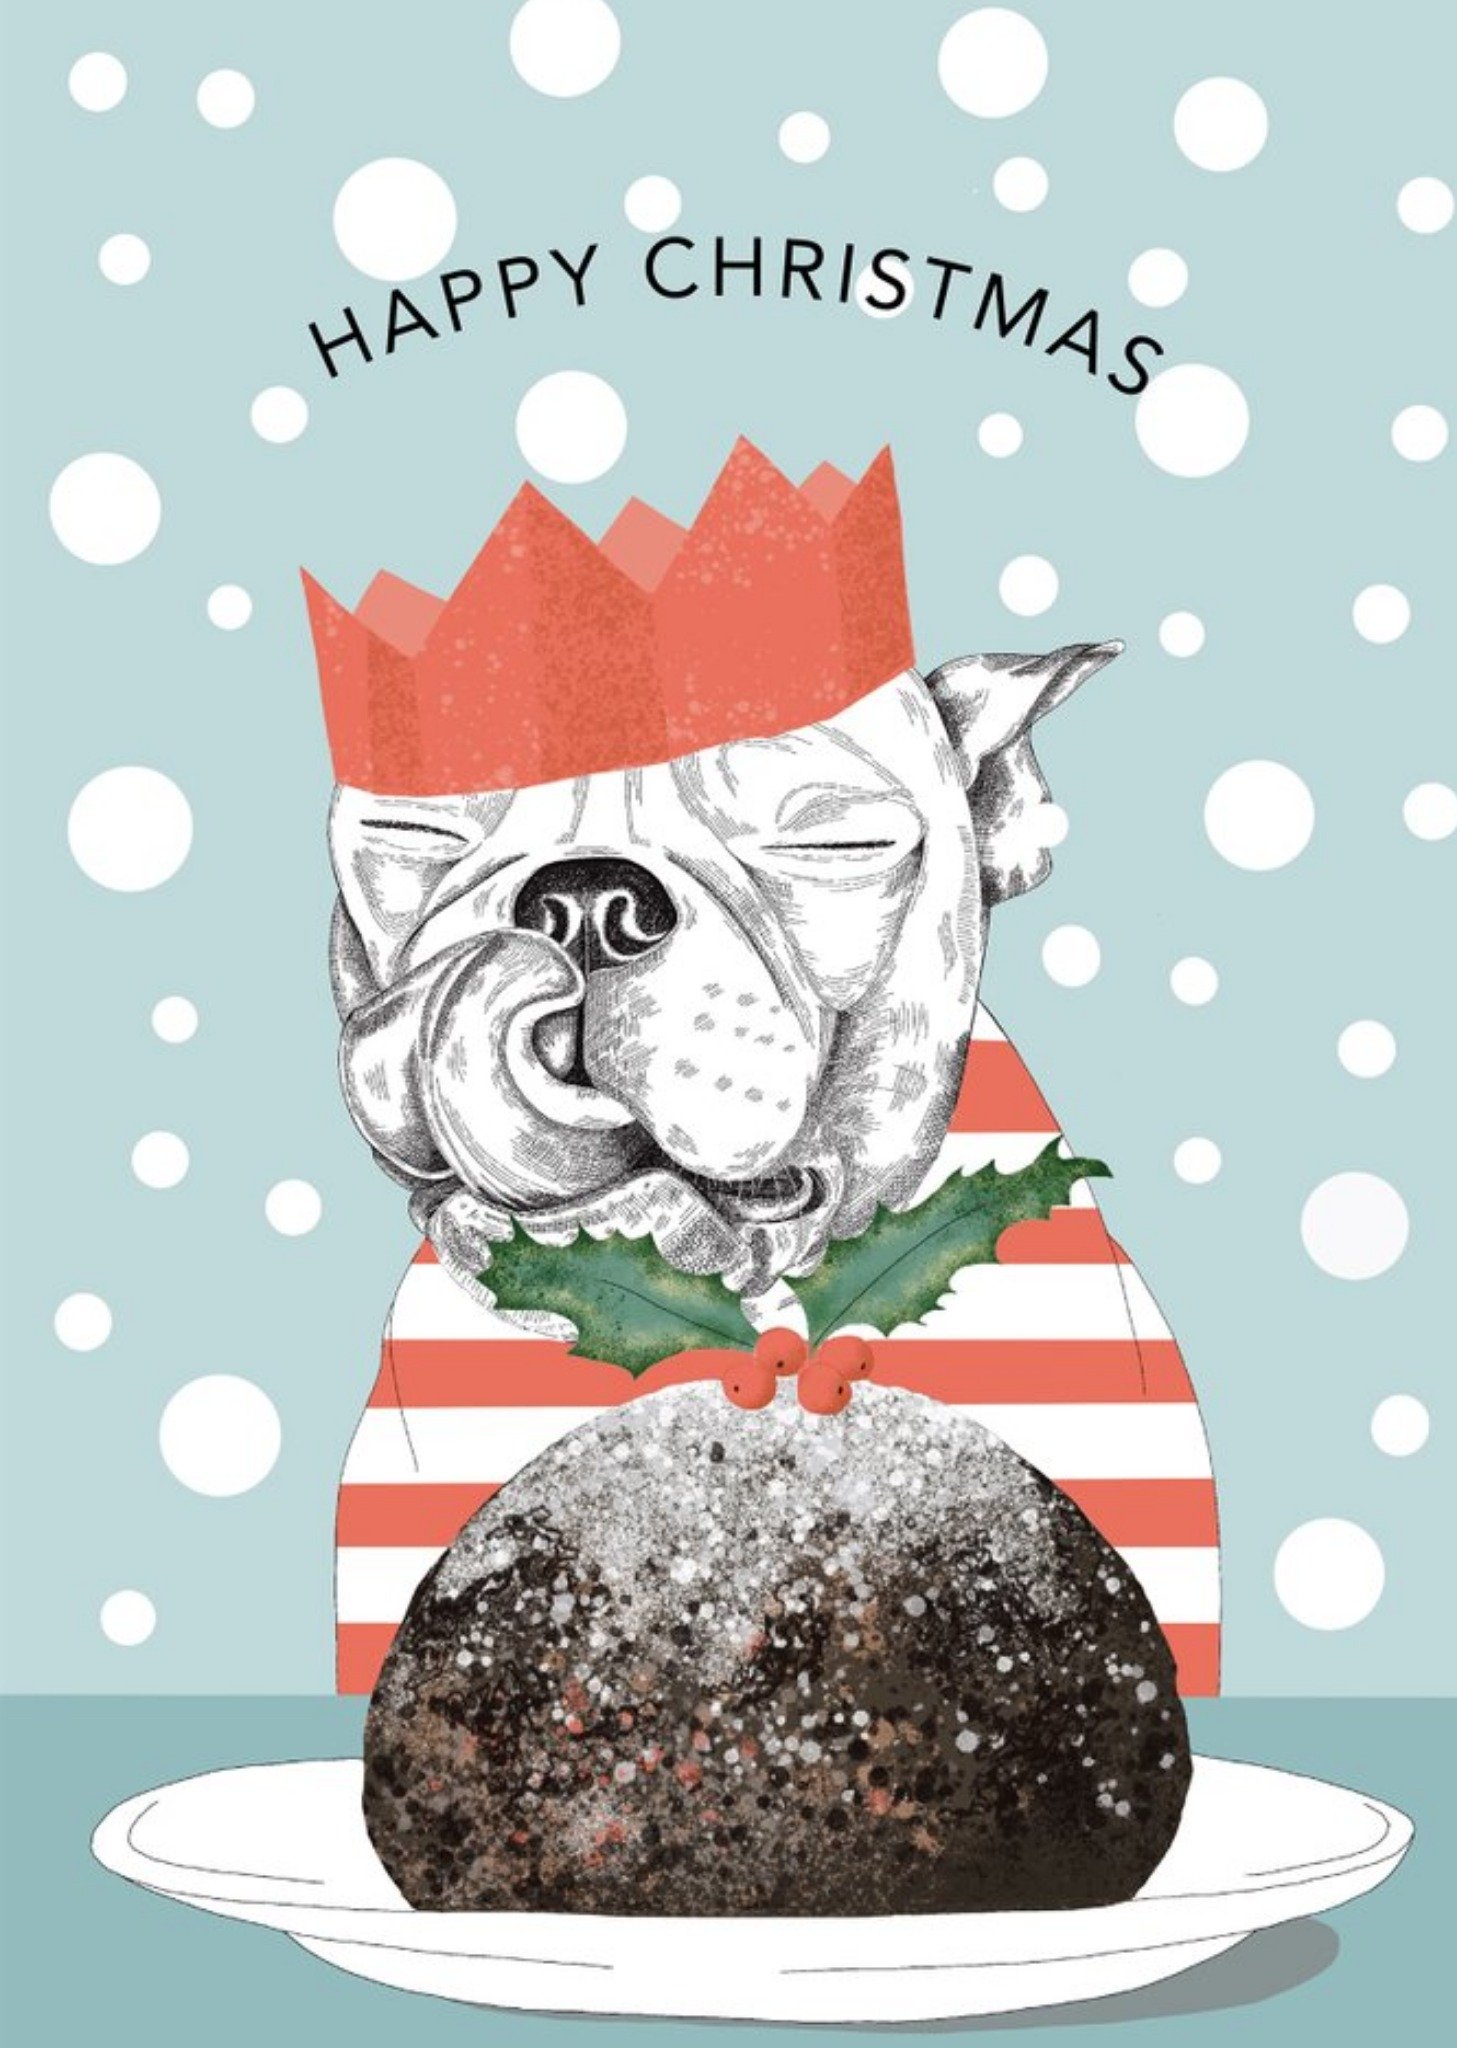 Moonpig Modern Cute Funny Illustration Dog And Christmas Pudding Christmas Card Ecard